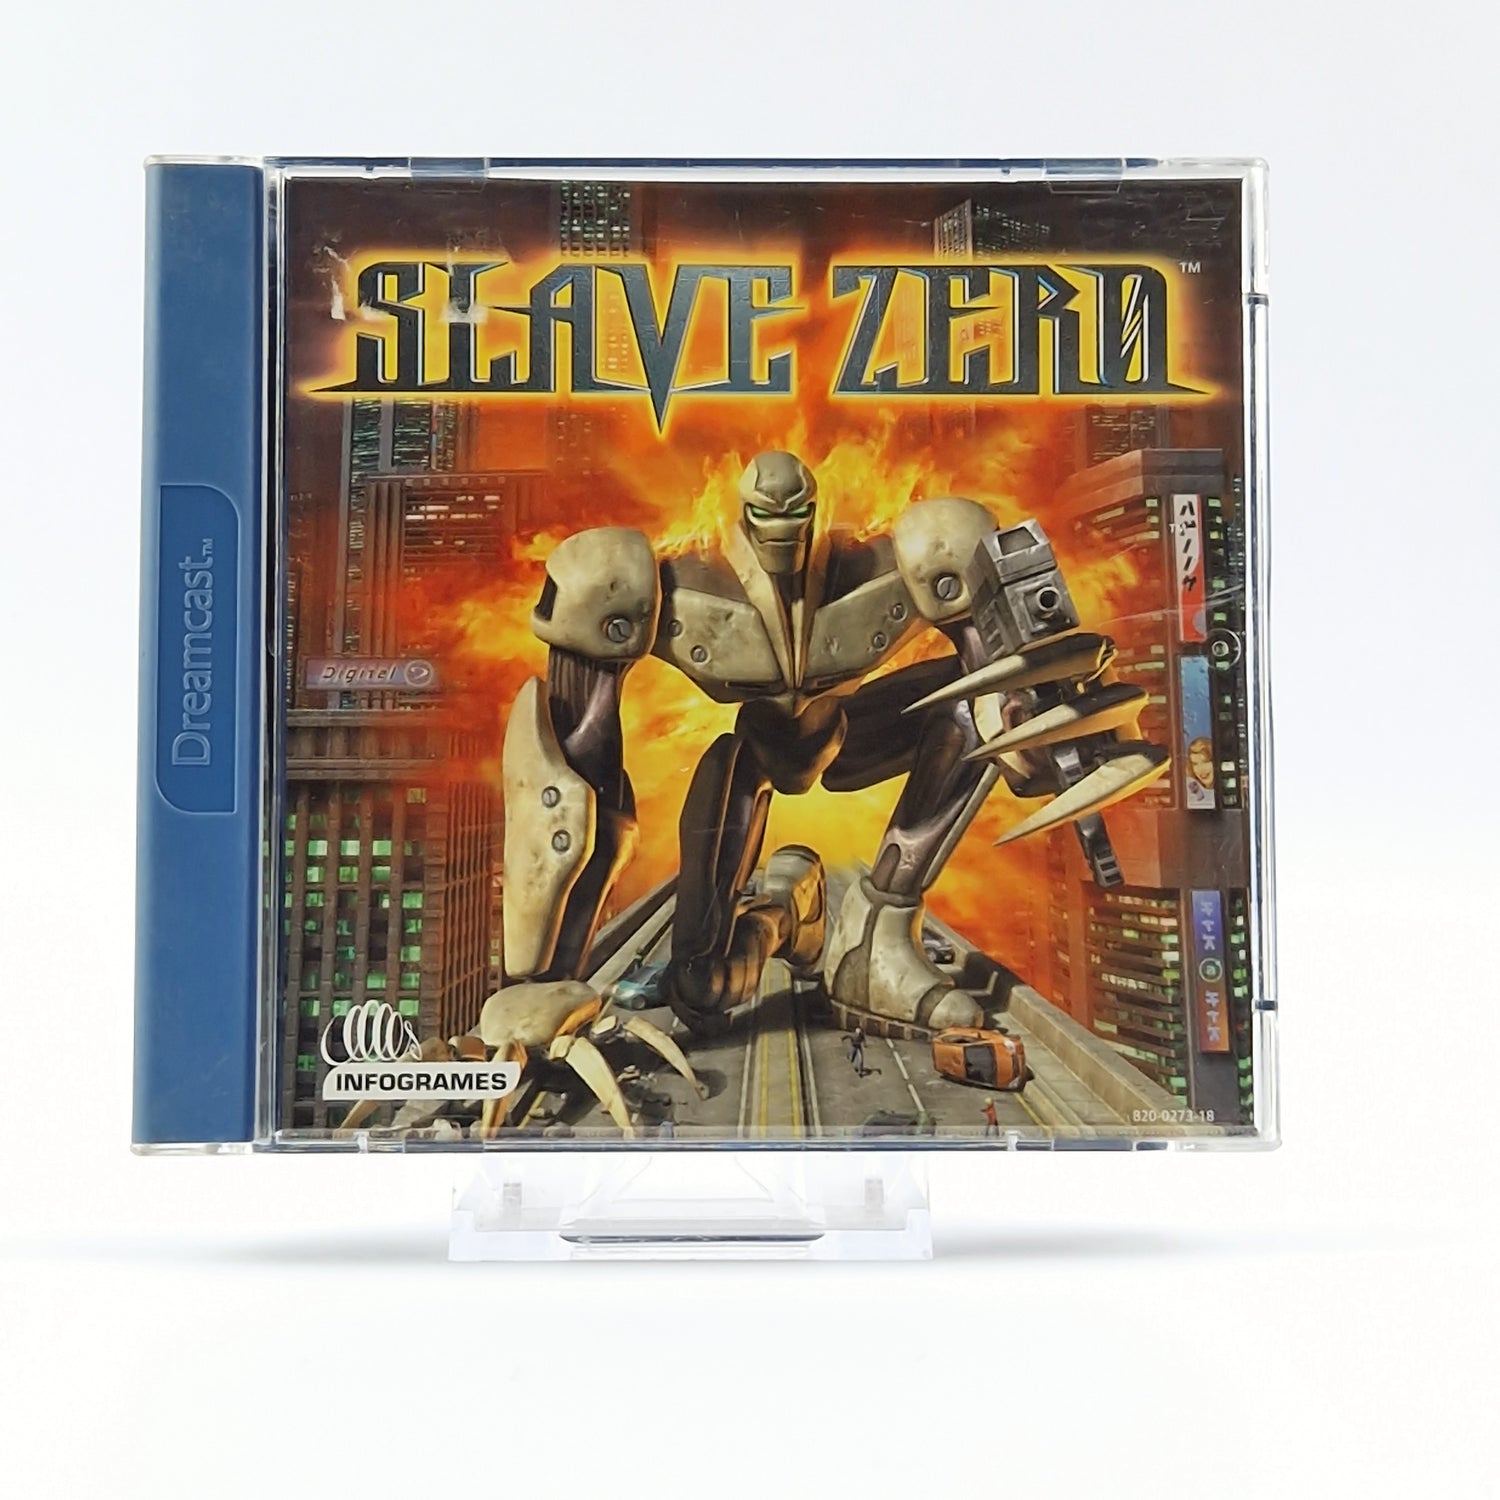 Sega Dreamcast Game: Slave Zero - OVP Instructions CD | PAL DC Game